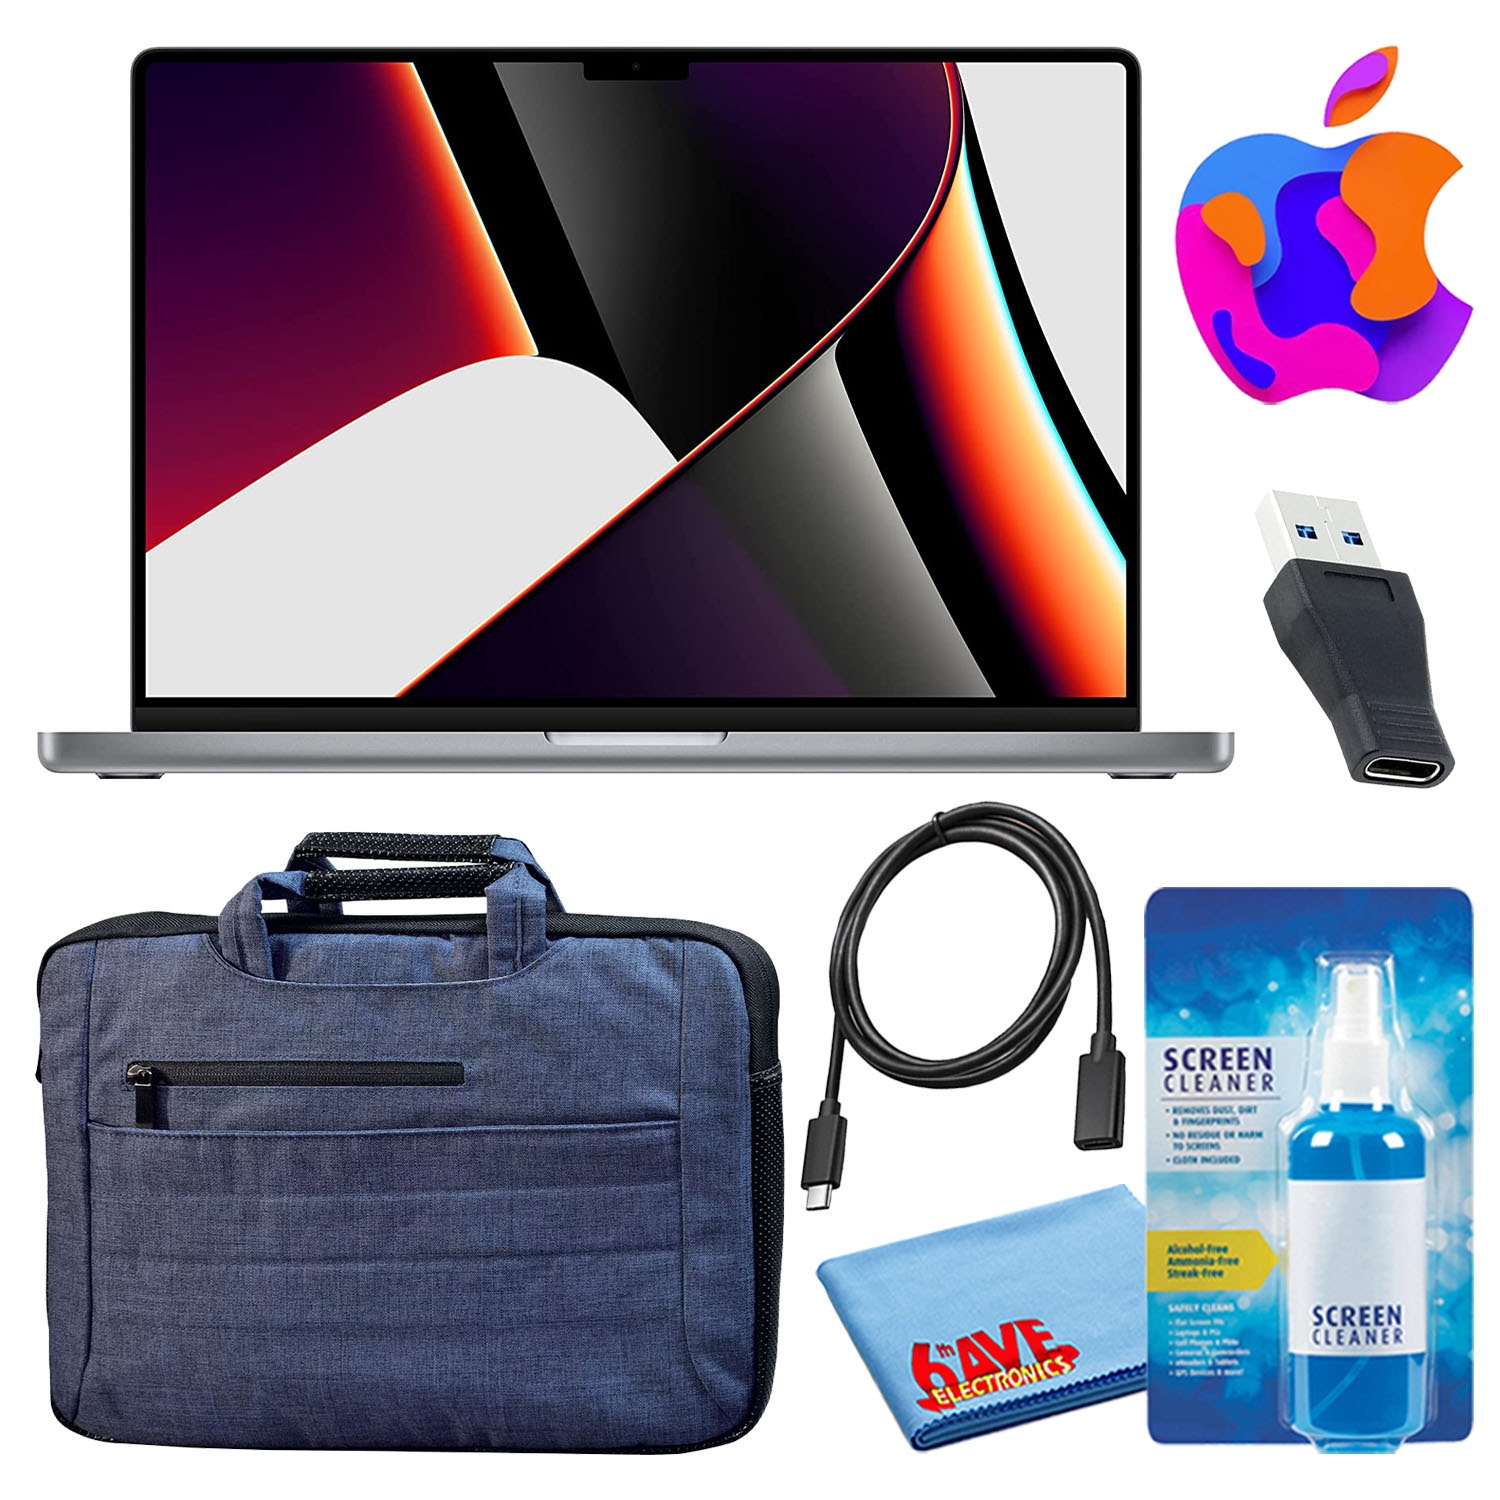 Apple MacBook Pro 16" Laptop (2021, M1 Pro, 512GB/1TB, Space Gray) + Carry Bag